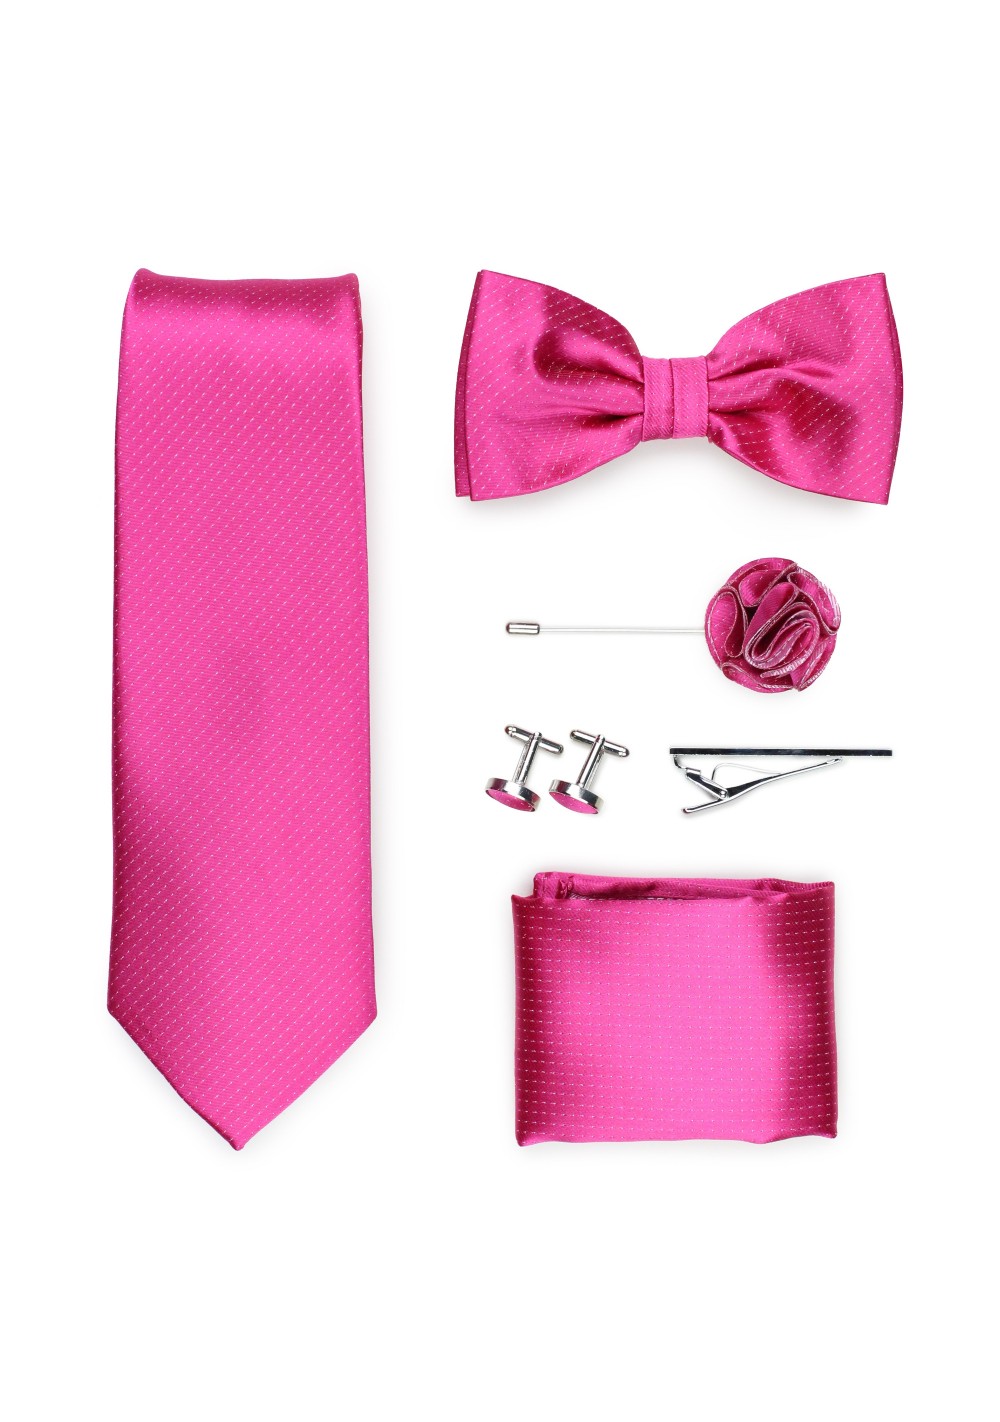 Suspender and Bow Tie Adults Men Pink Magenta Wedding Formal Wear Accessories 